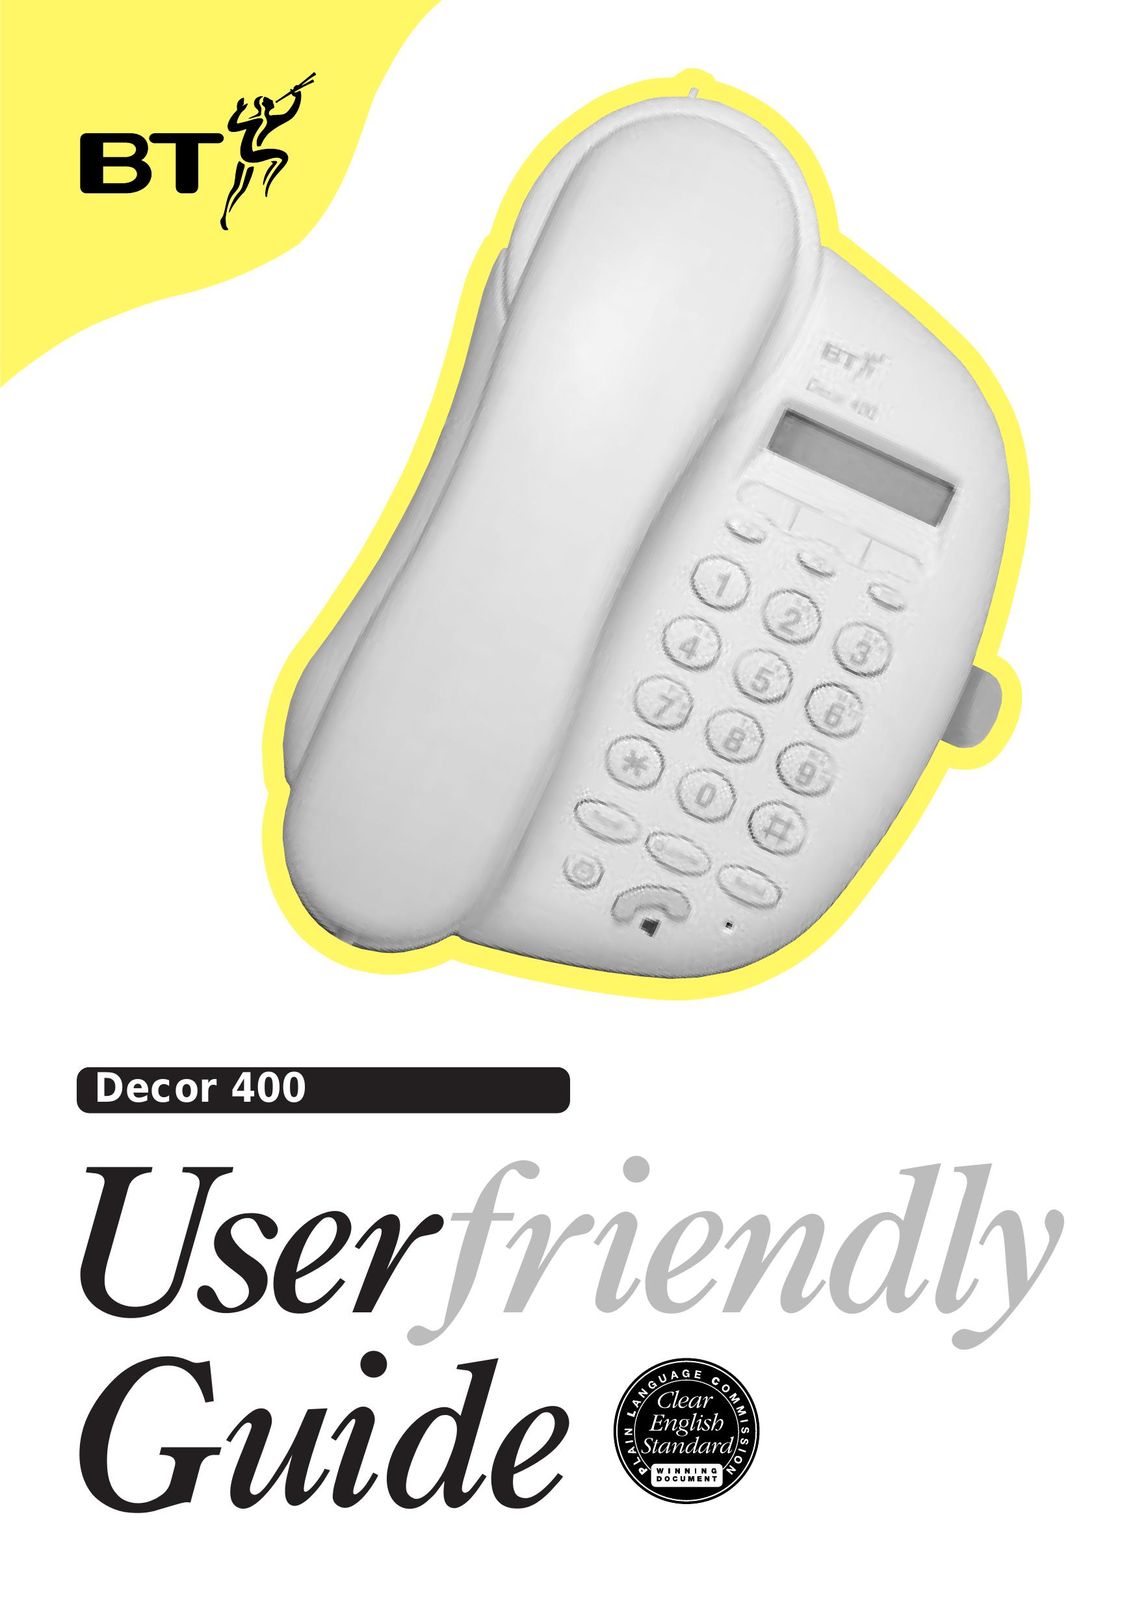 BT Decor 400 Telephone User Manual